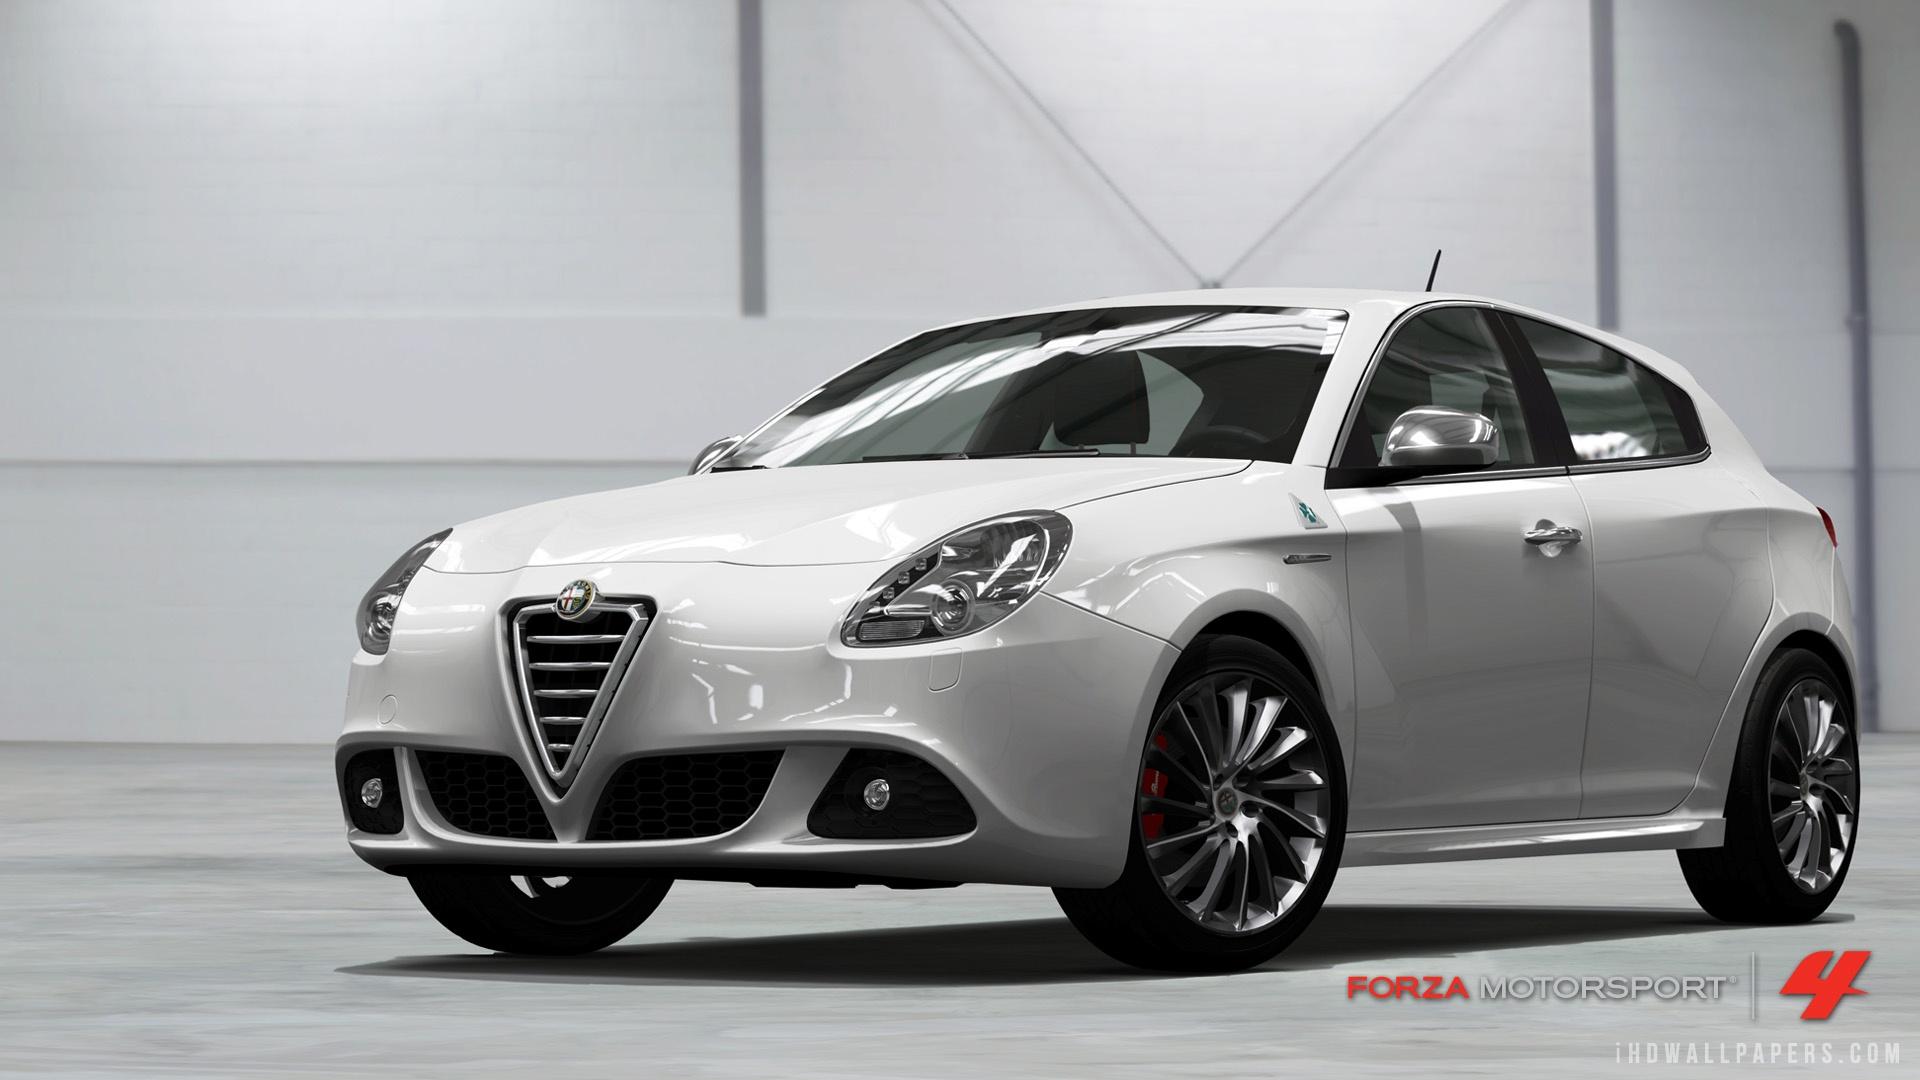 Alfa Romeo Giulietta in Forza Motorsport 4 wallpaper. games